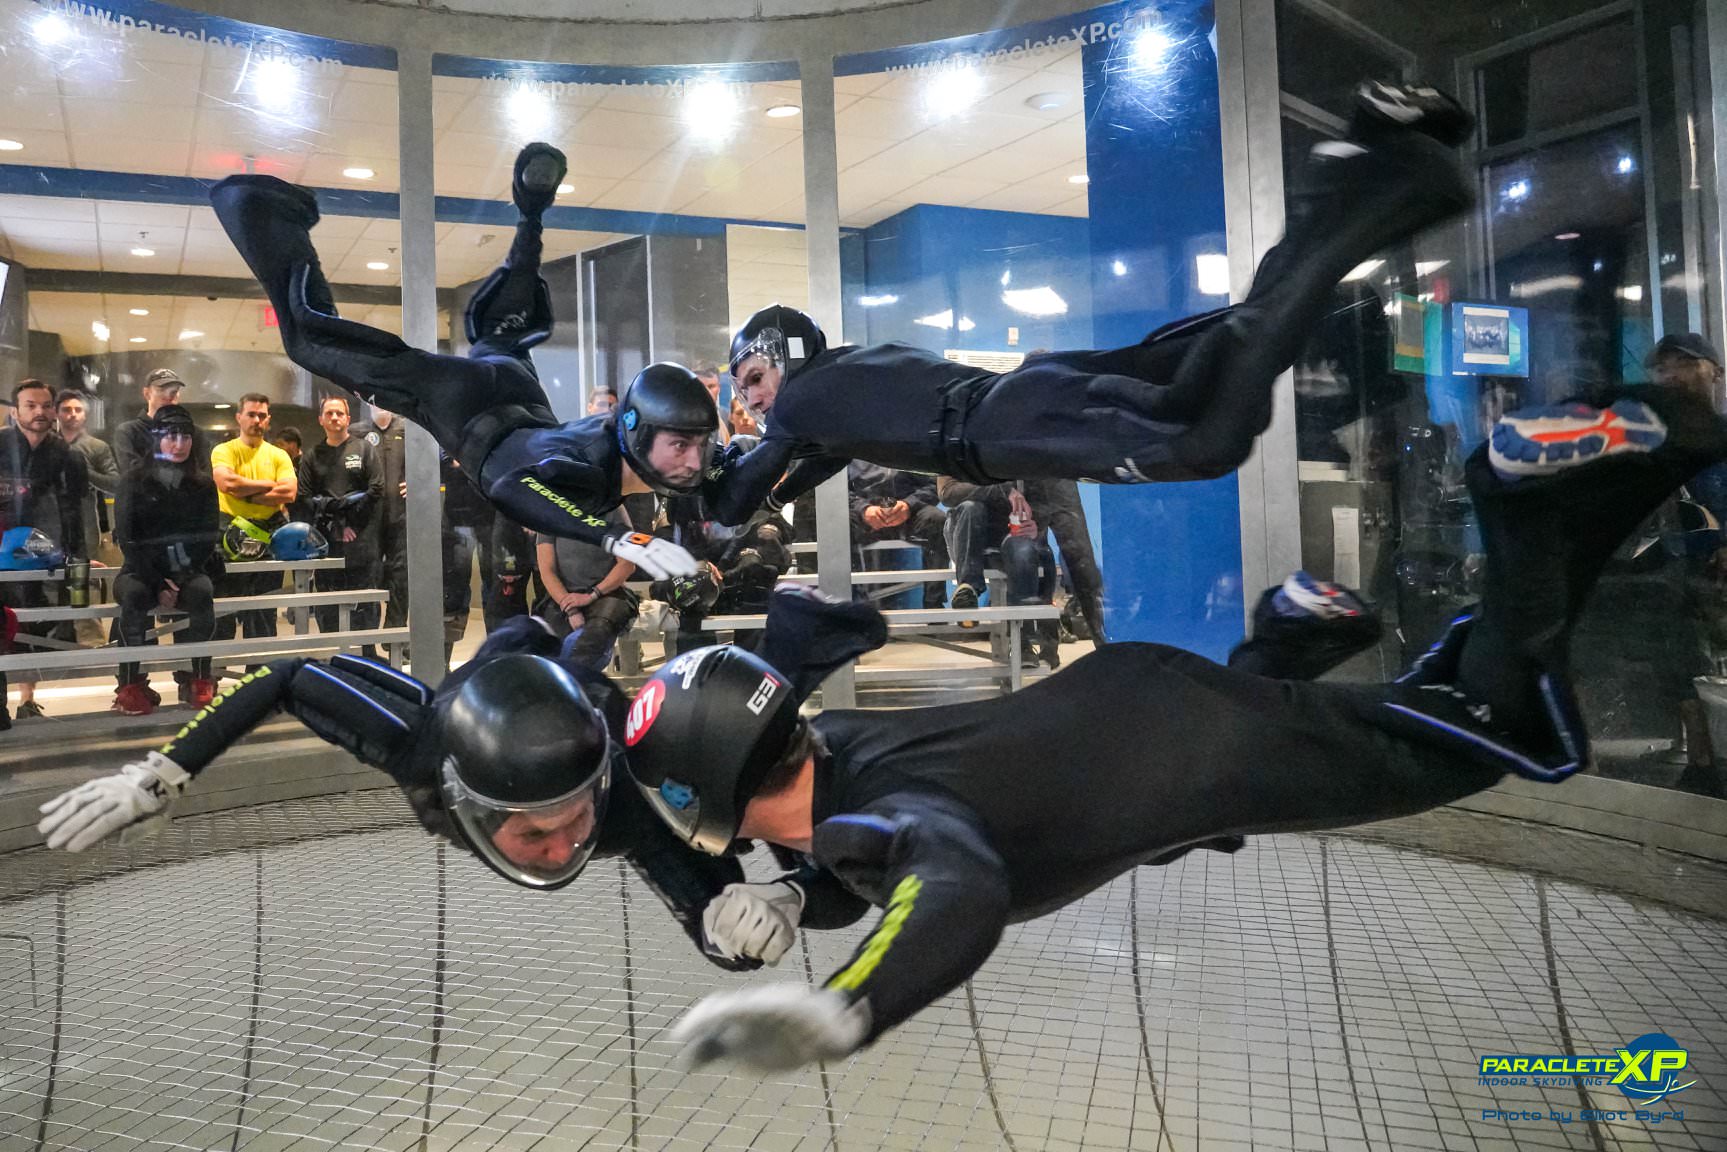 Zero-gravity sports are close to reality